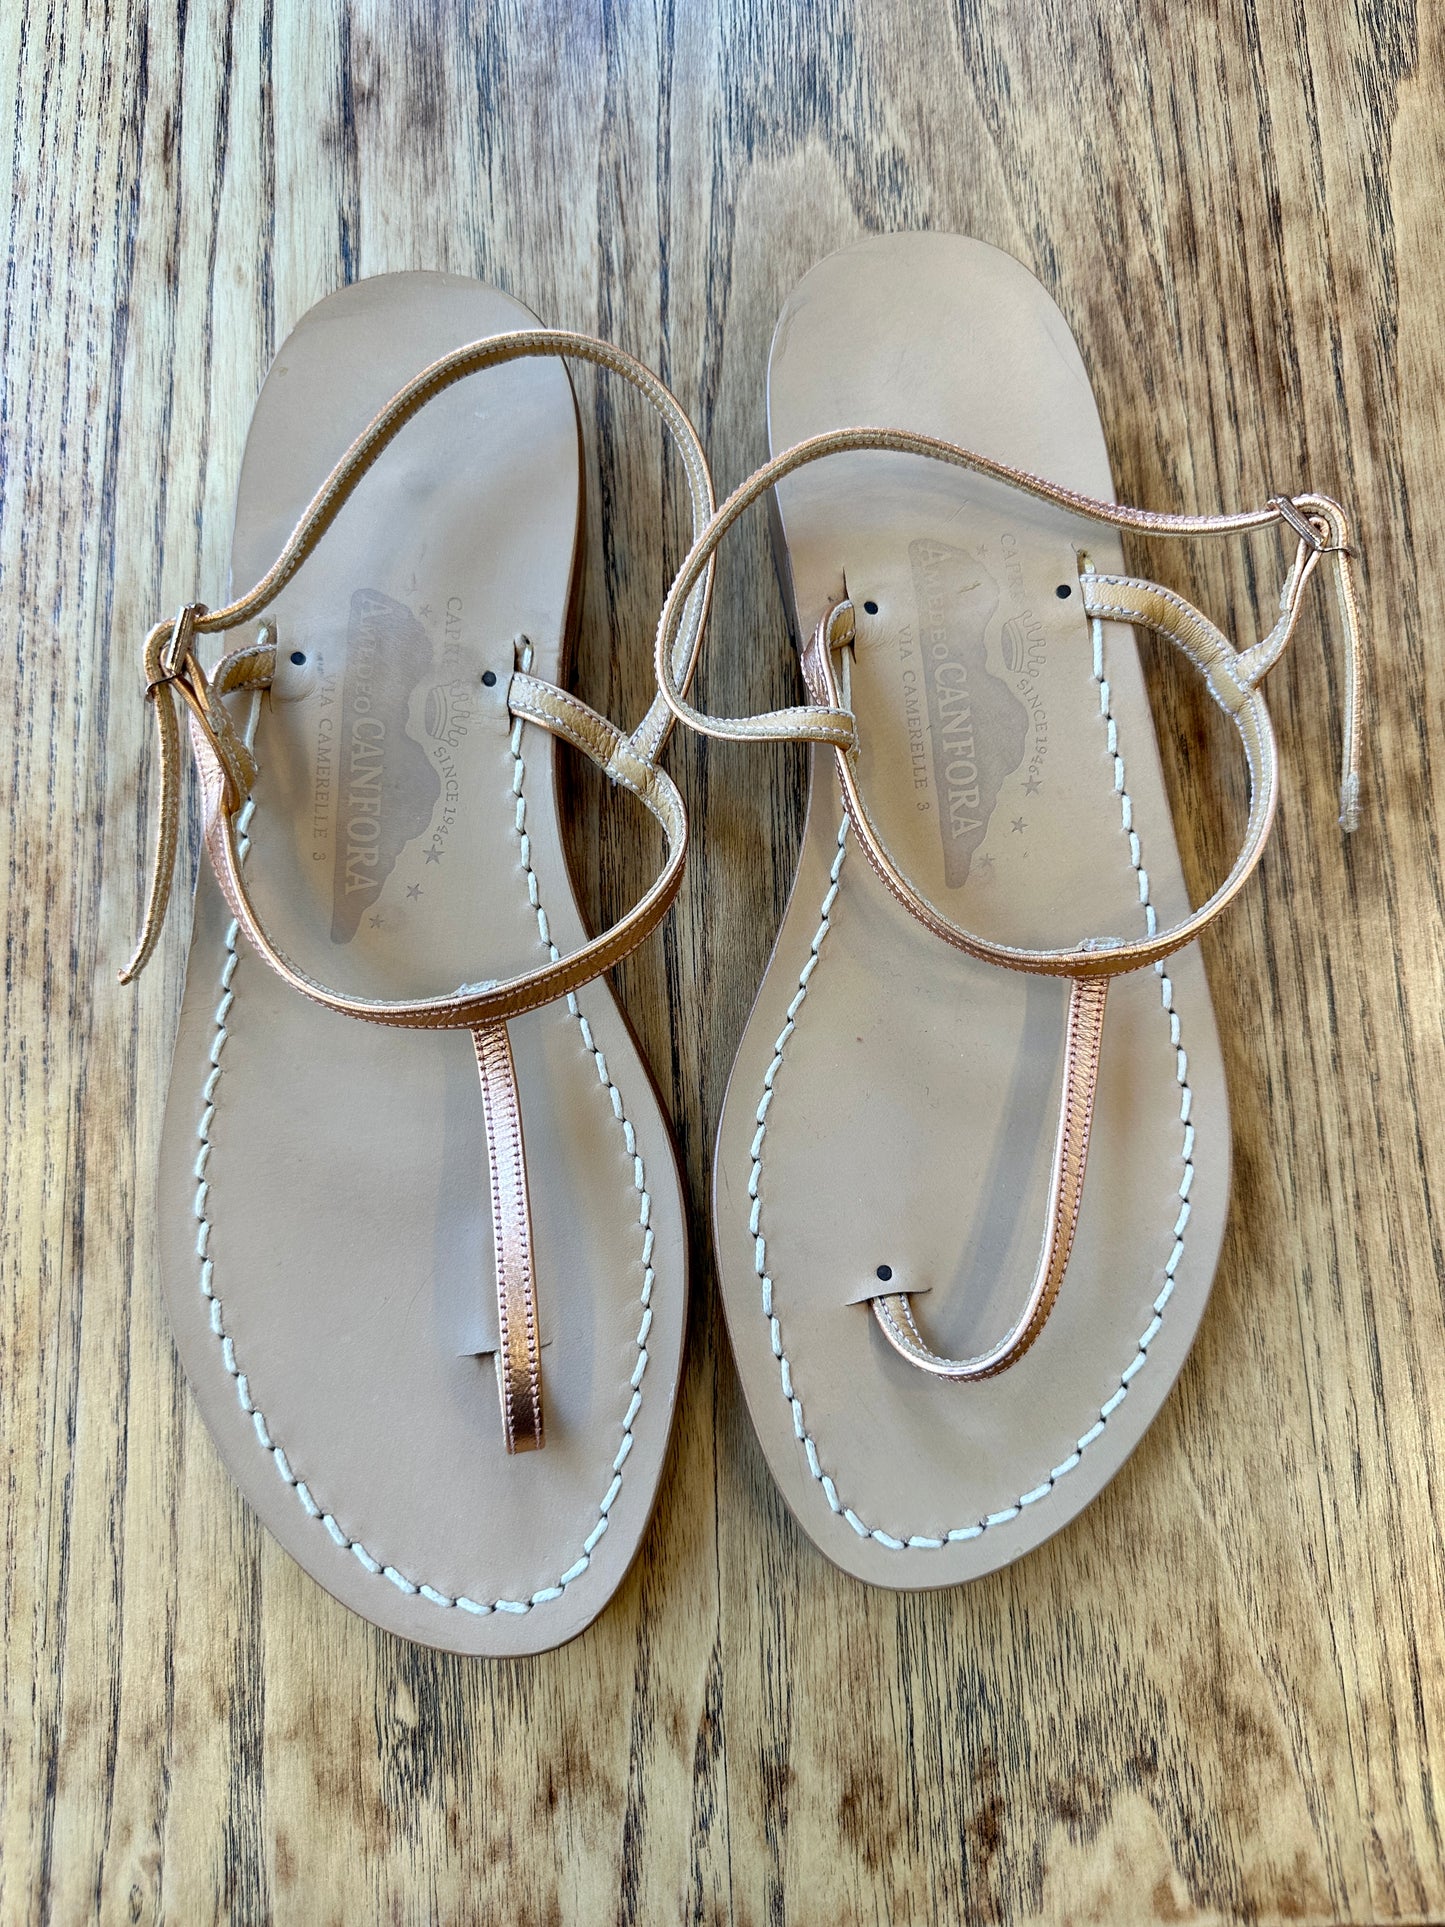 AMEDEO CANFORA sandals/ US9-39.5